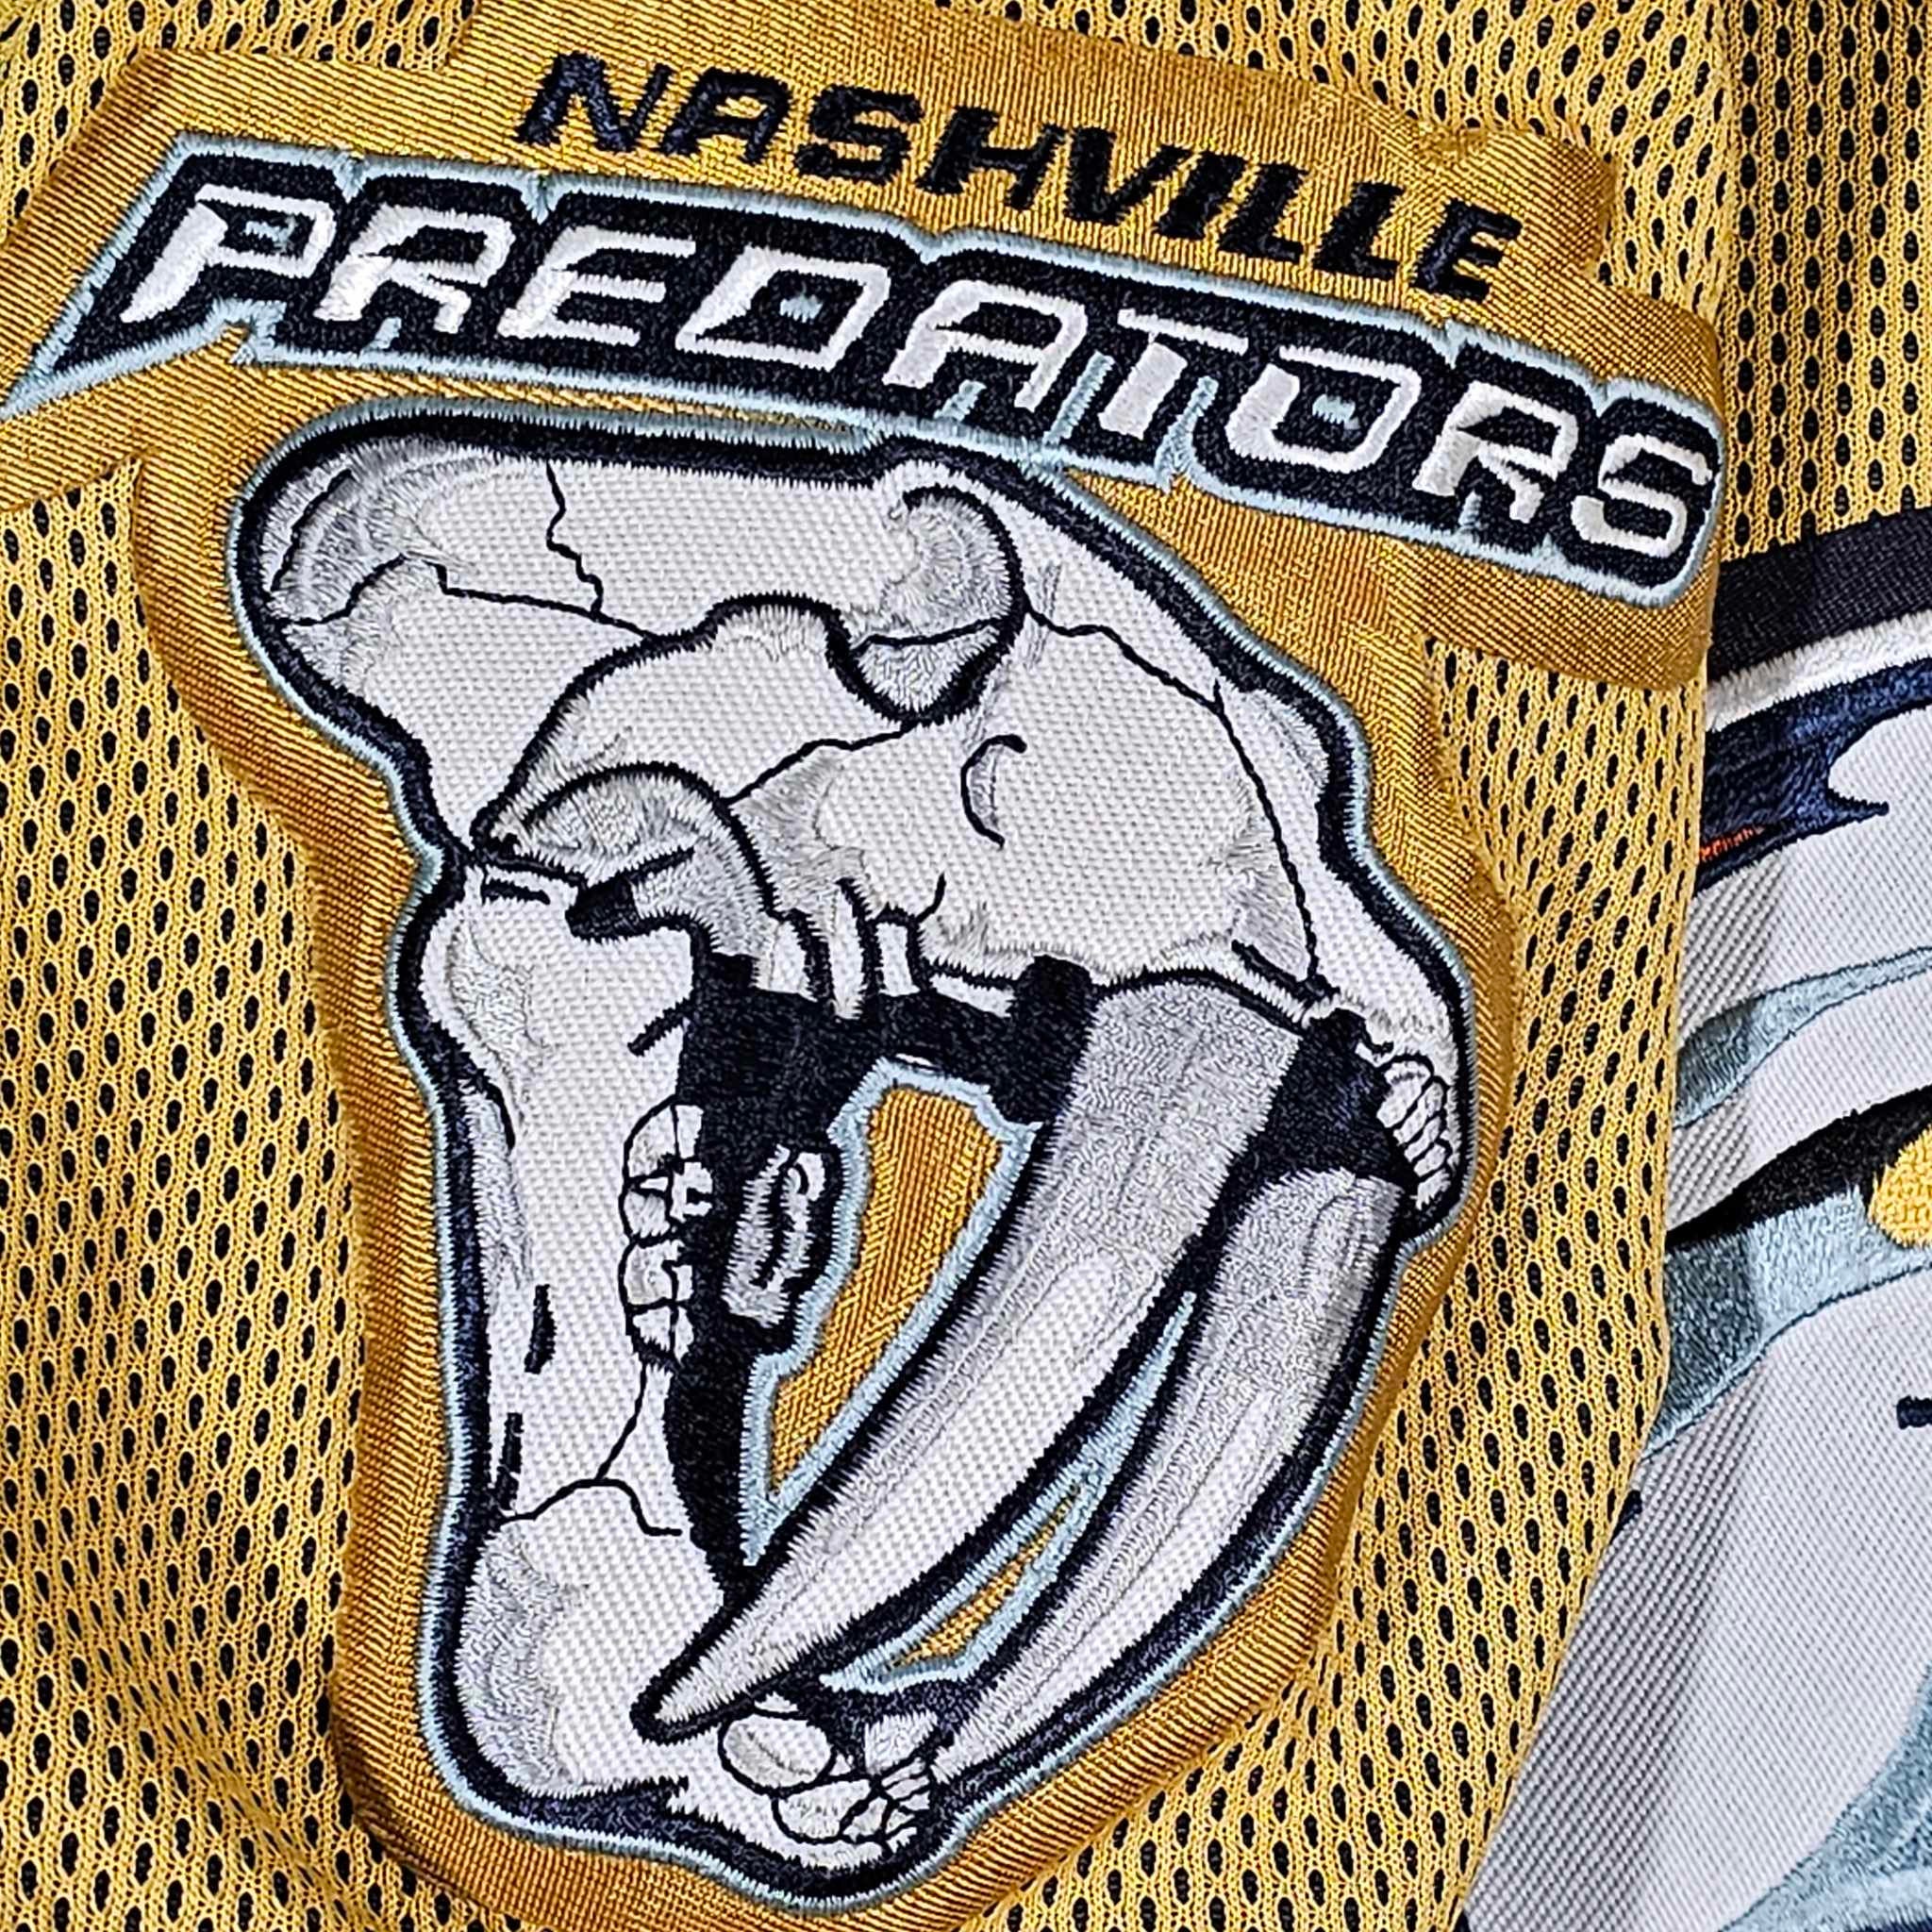 90's Nashville Predators Starter NHL Jersey Size Medium – Rare VNTG